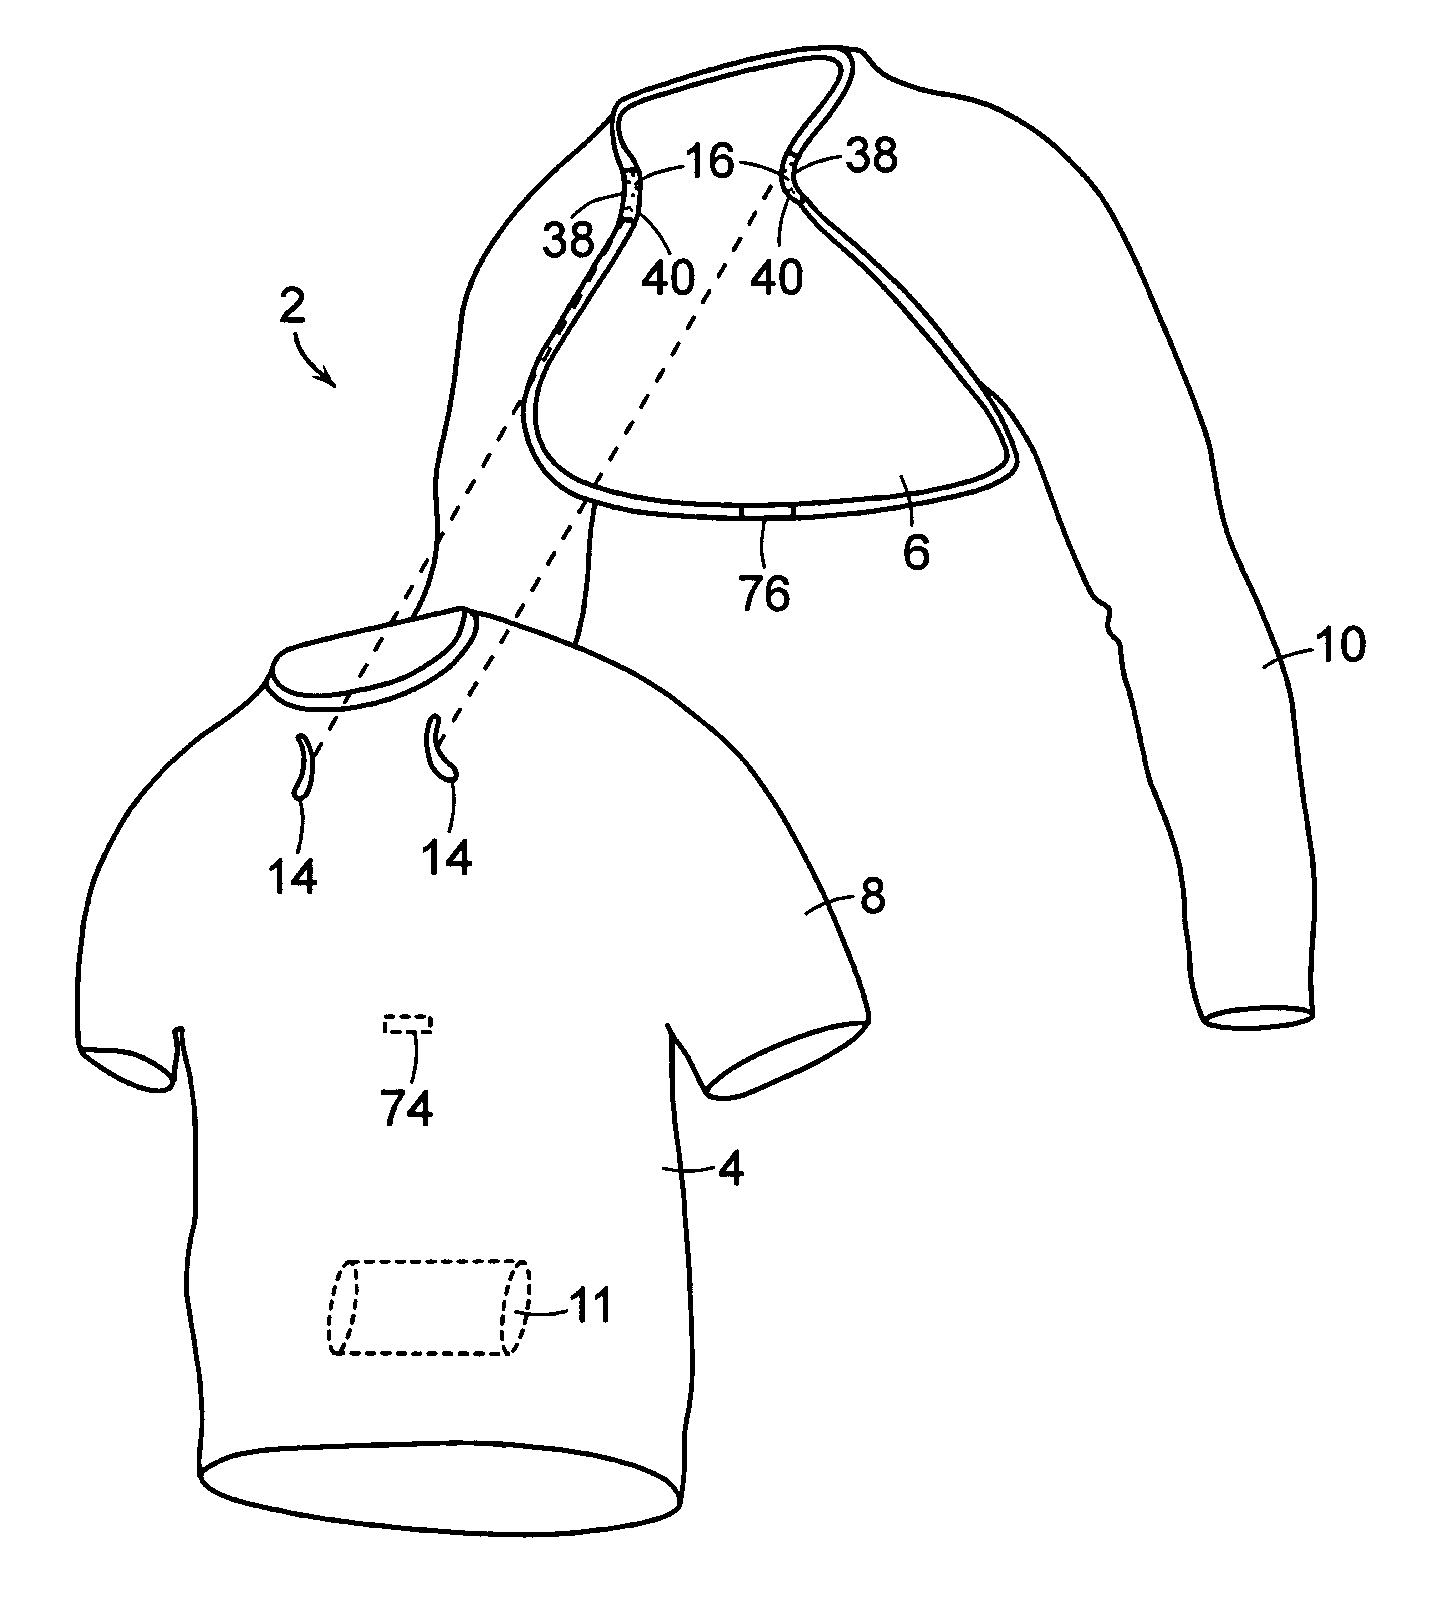 Garment having multiple layers